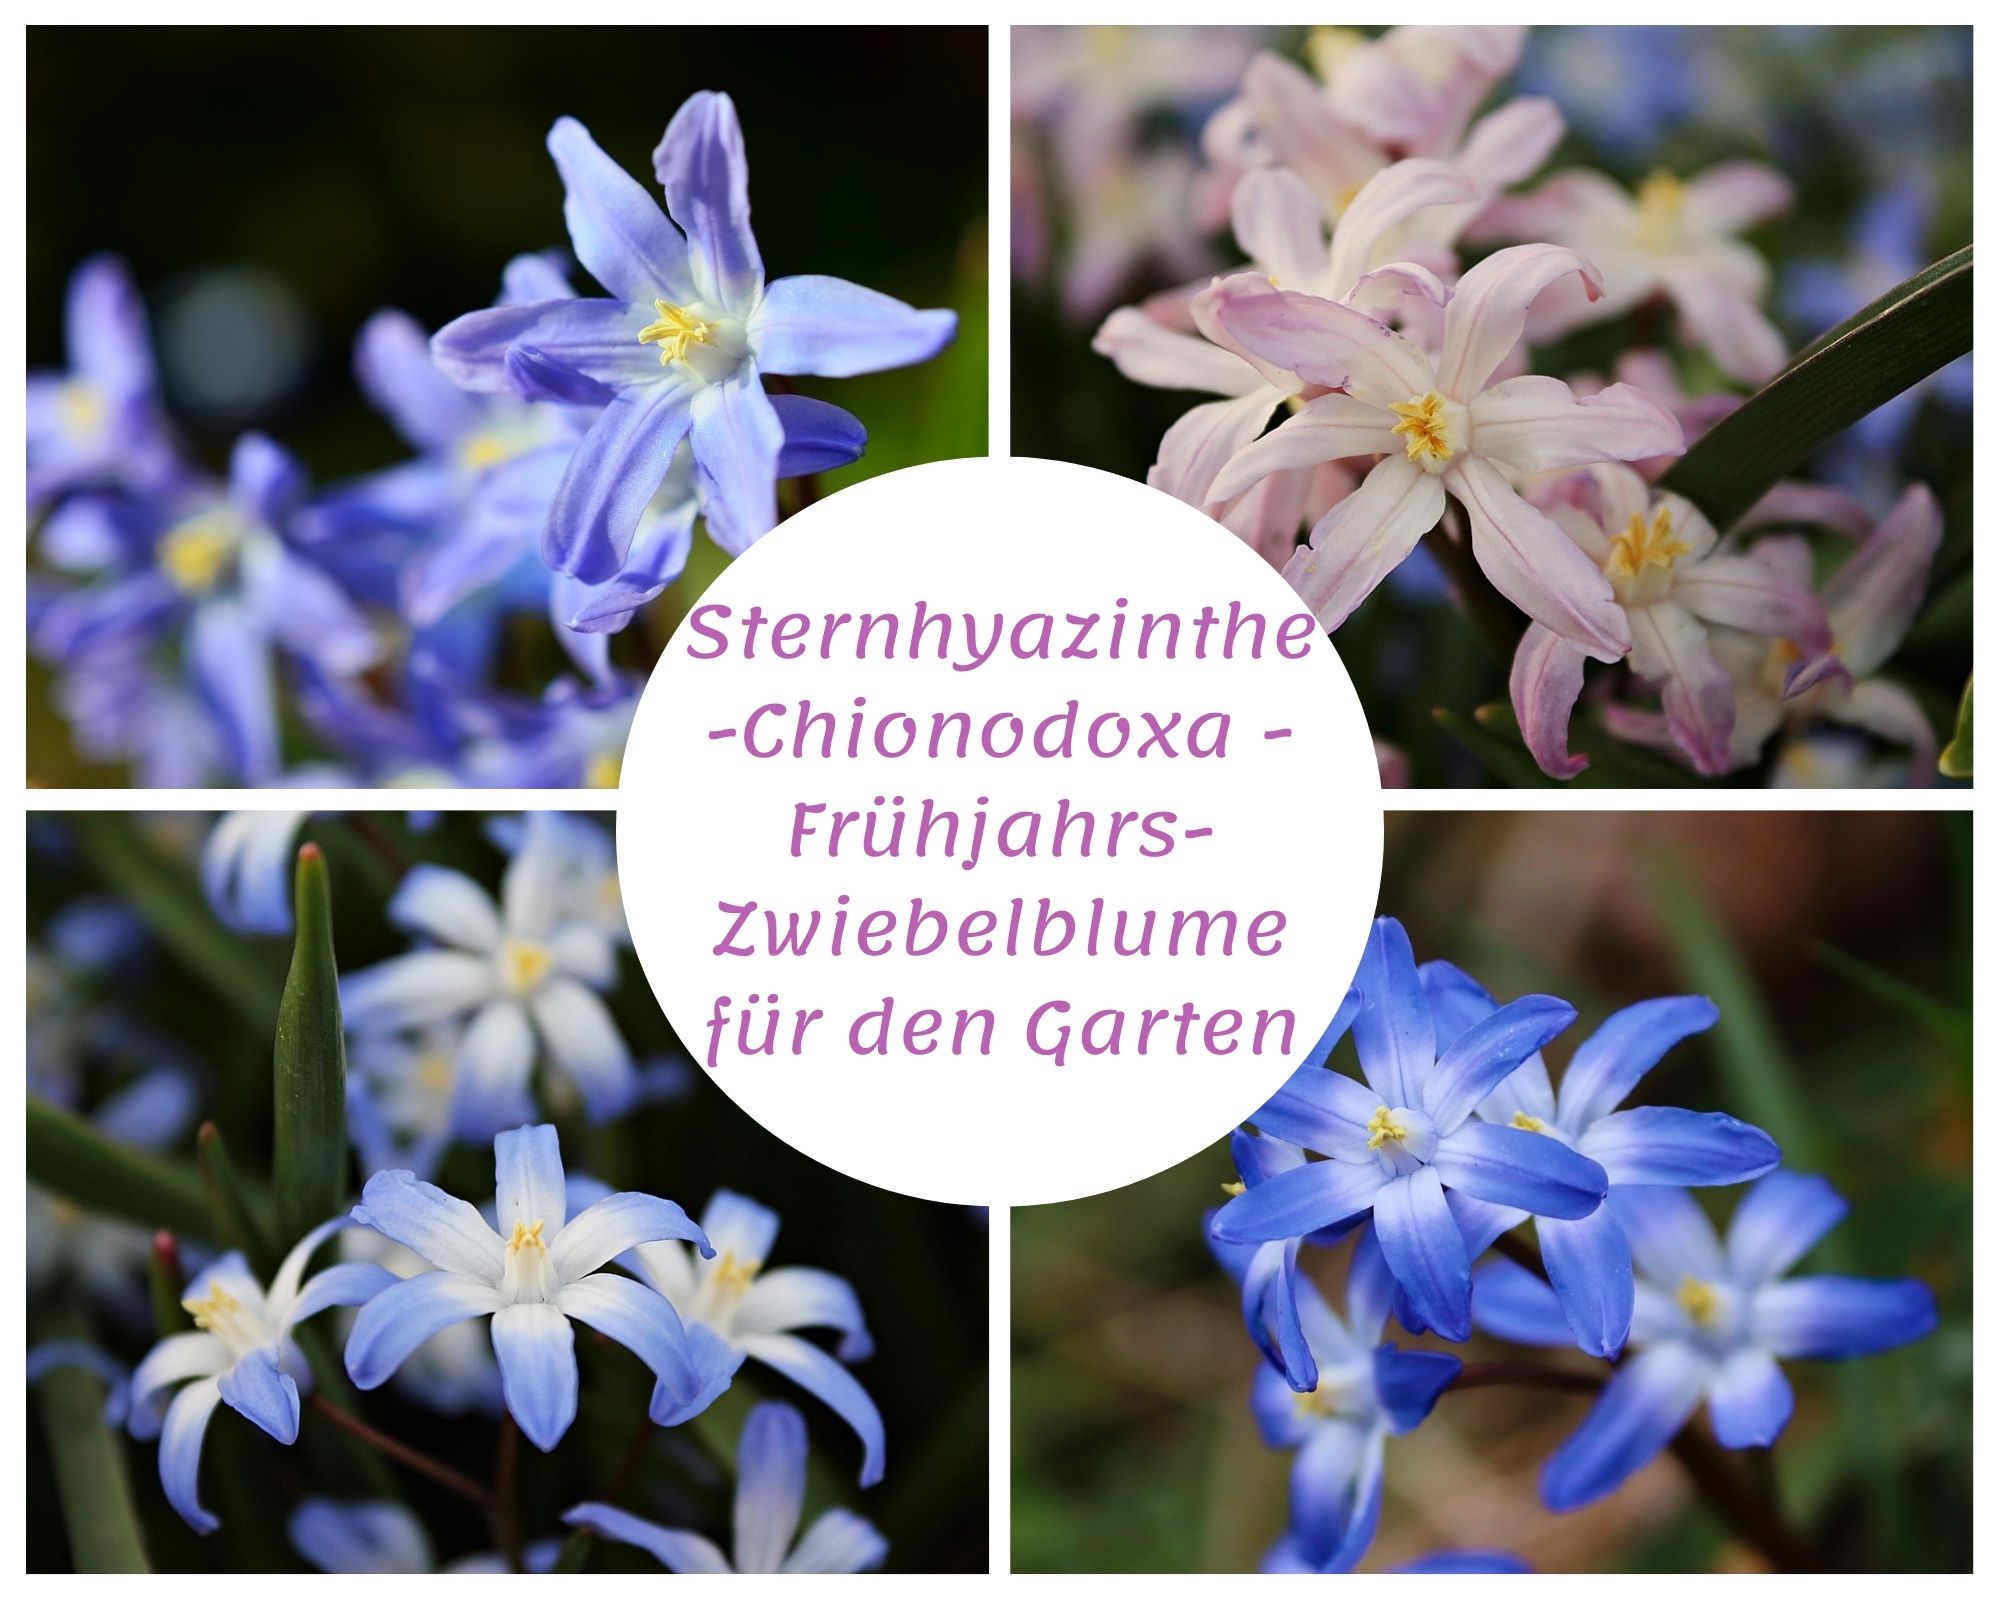 Sternhyazinthe-Chionodoxa - Frühjahrs-Zwiebelblume für den Garten